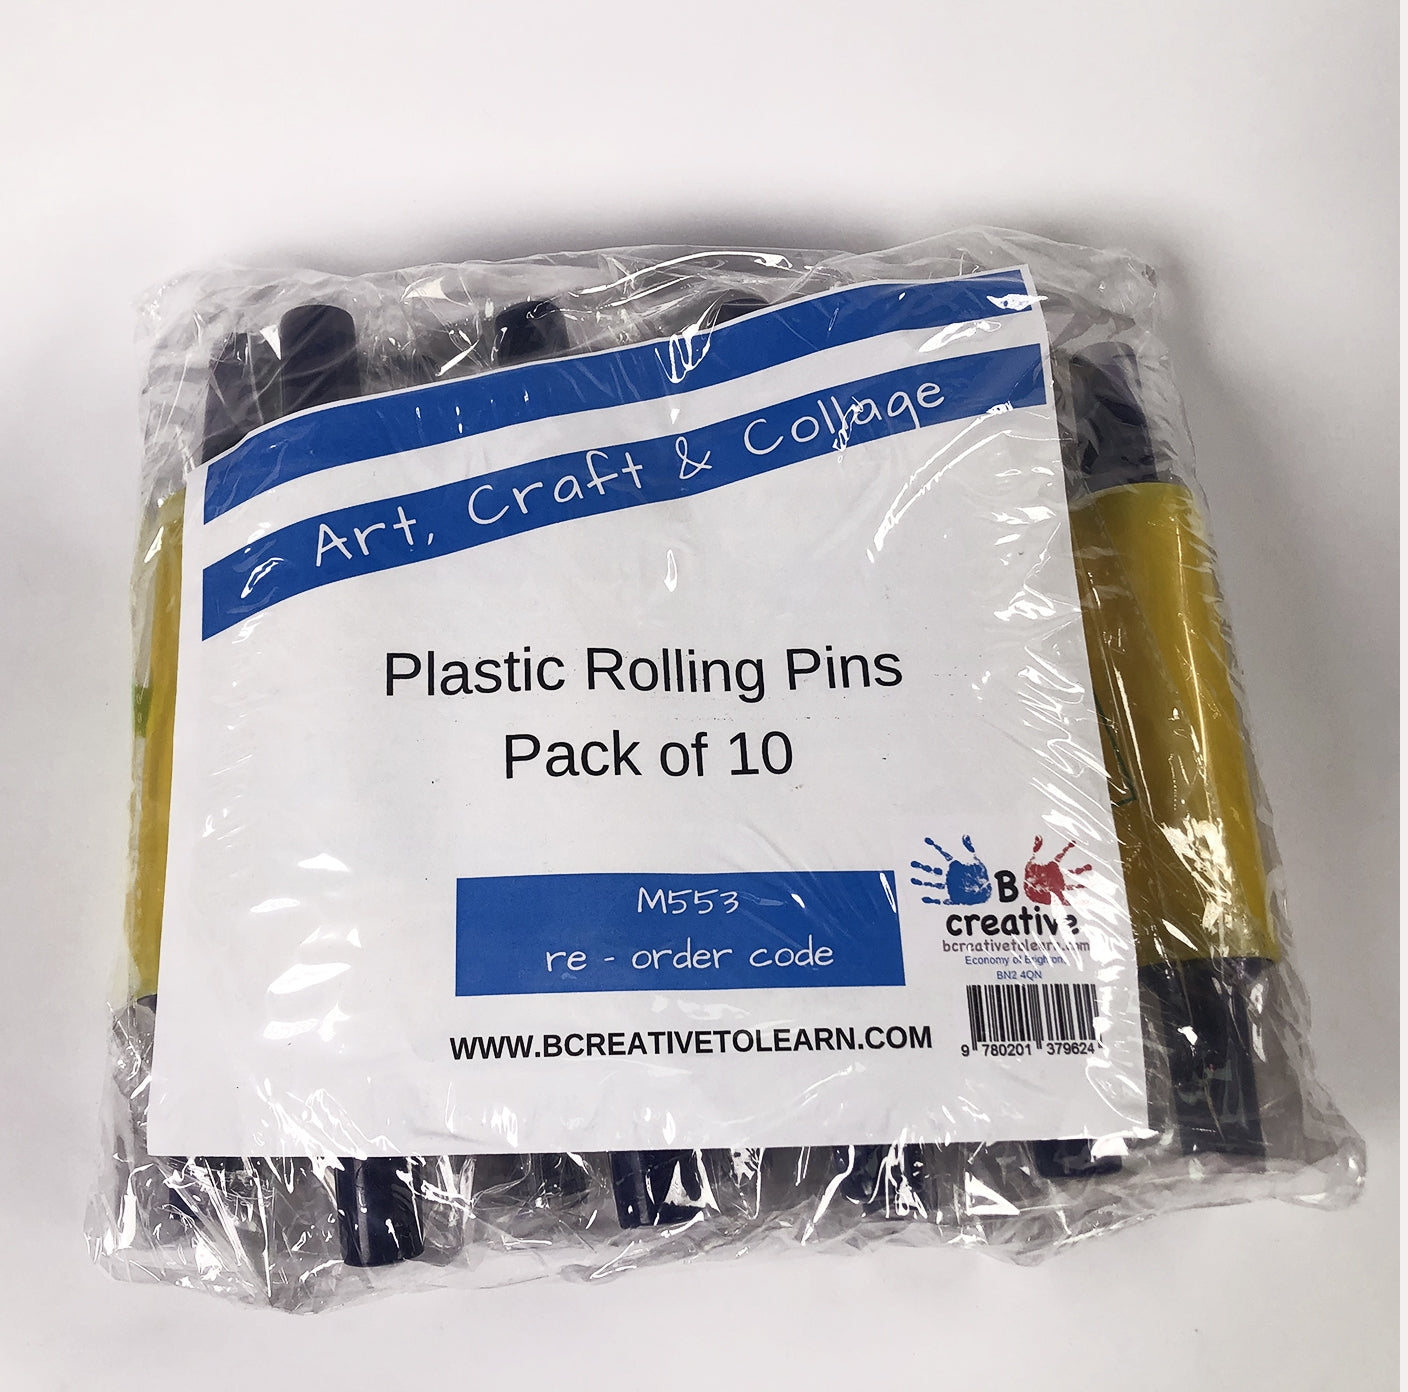 Plastic Rolling Pins